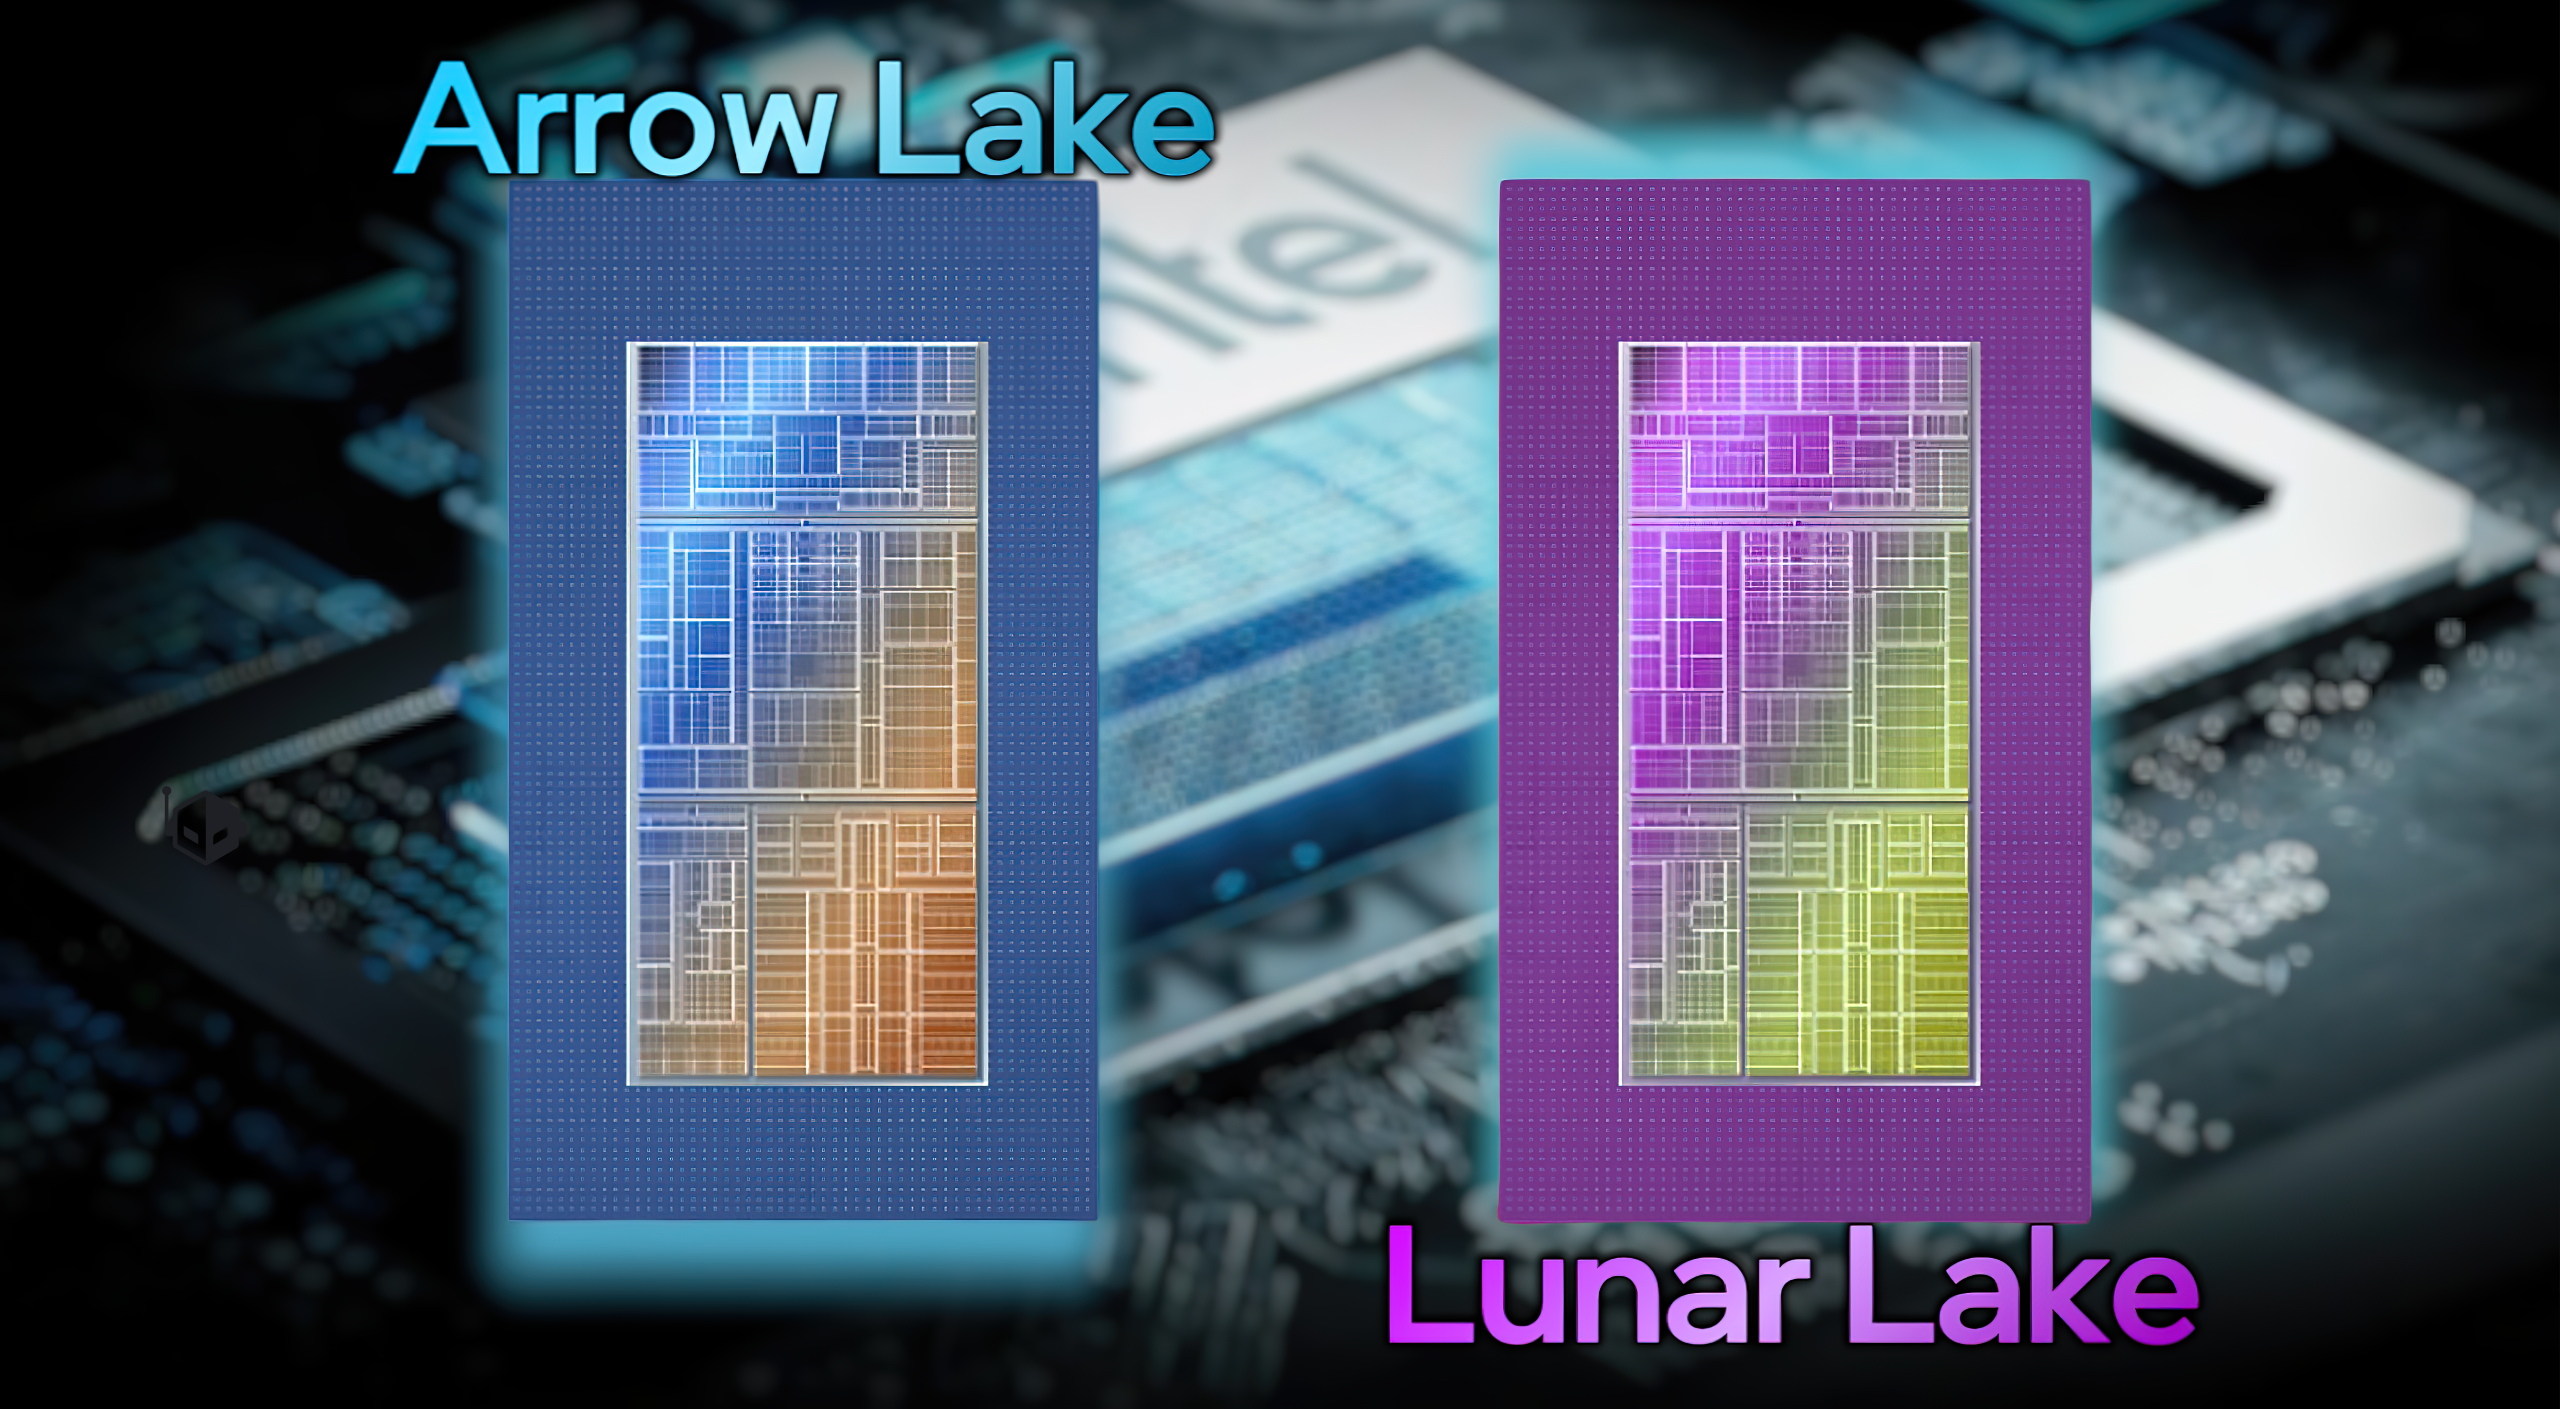 Intel-Arrow-Lake-Lunar-Lake-CPUs.png